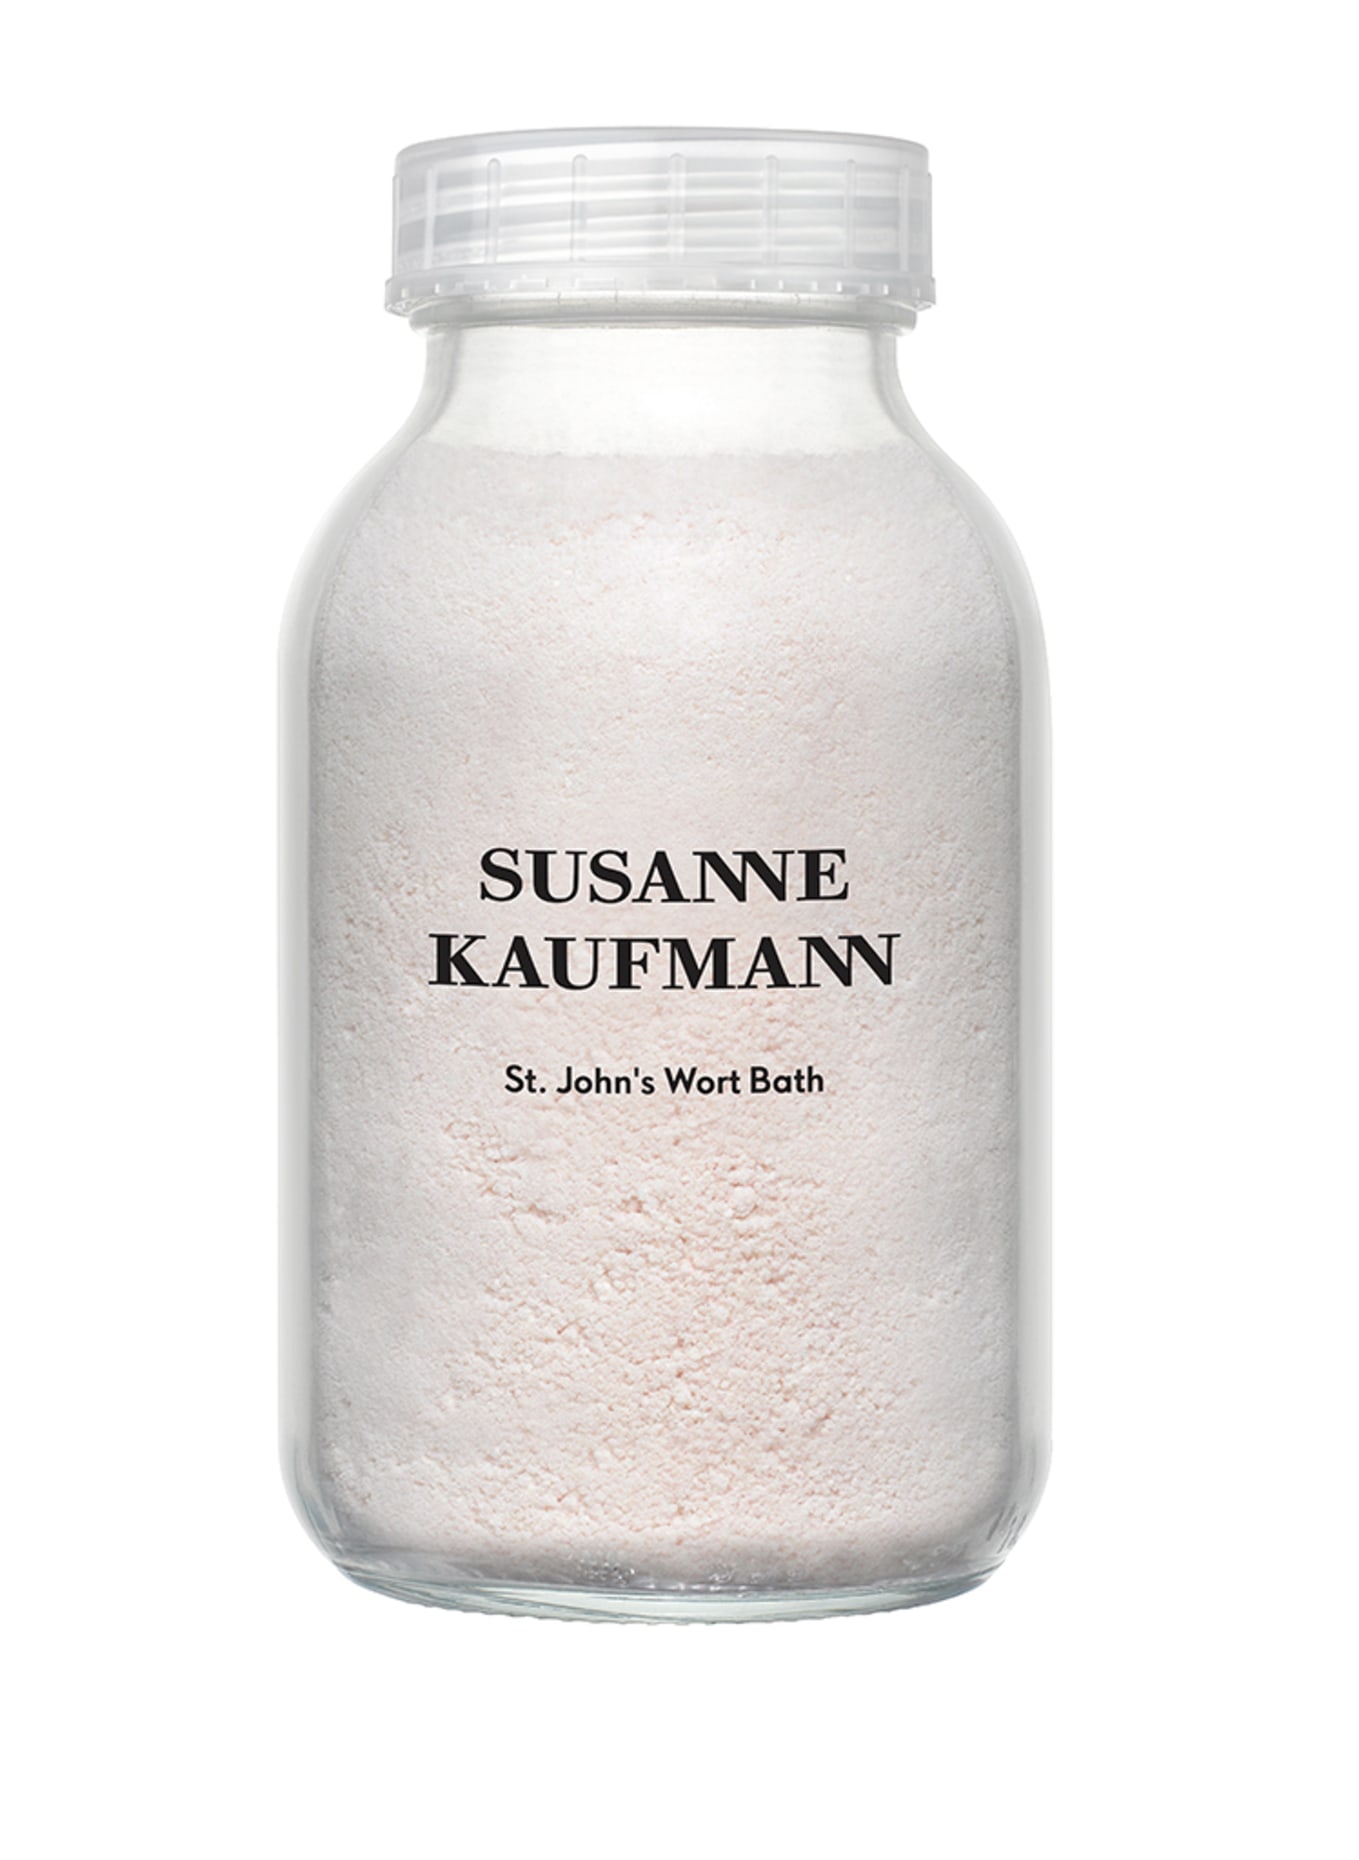 SUSANNE KAUFMANN ST. JOHN'S WORT BATH (Obrazek 1)